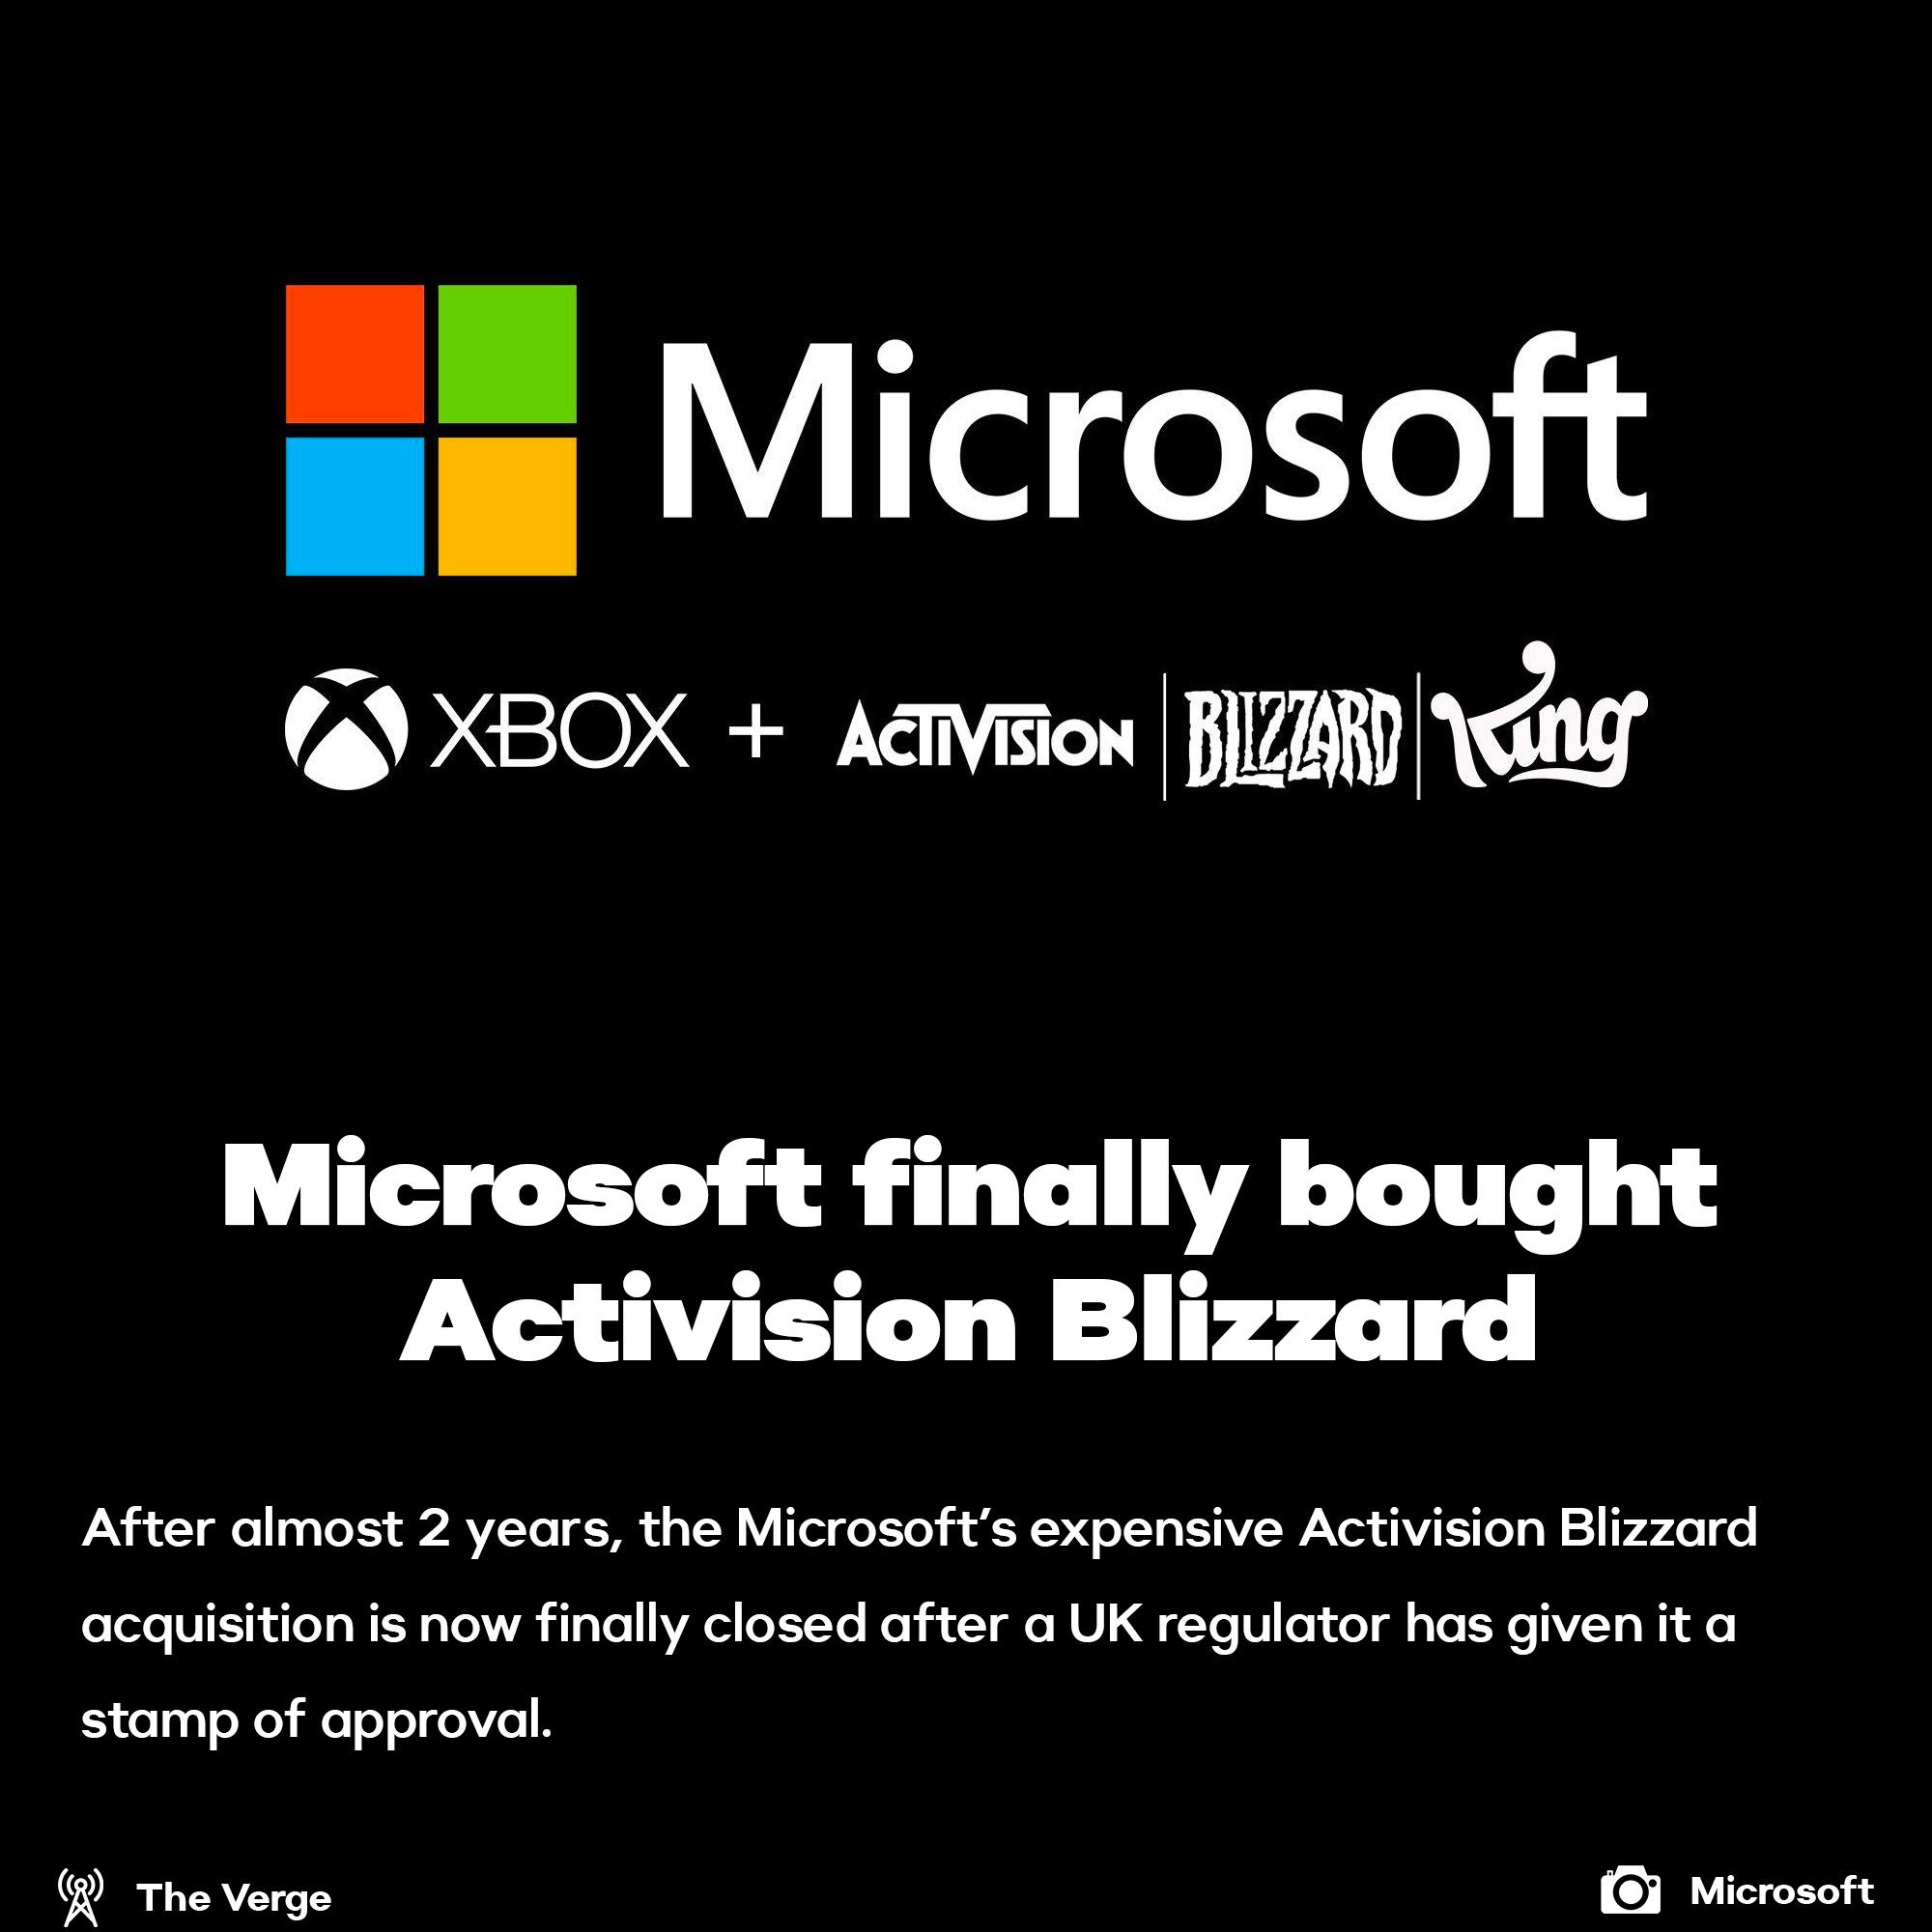 Microsoft finally acquired Activision Blizzard